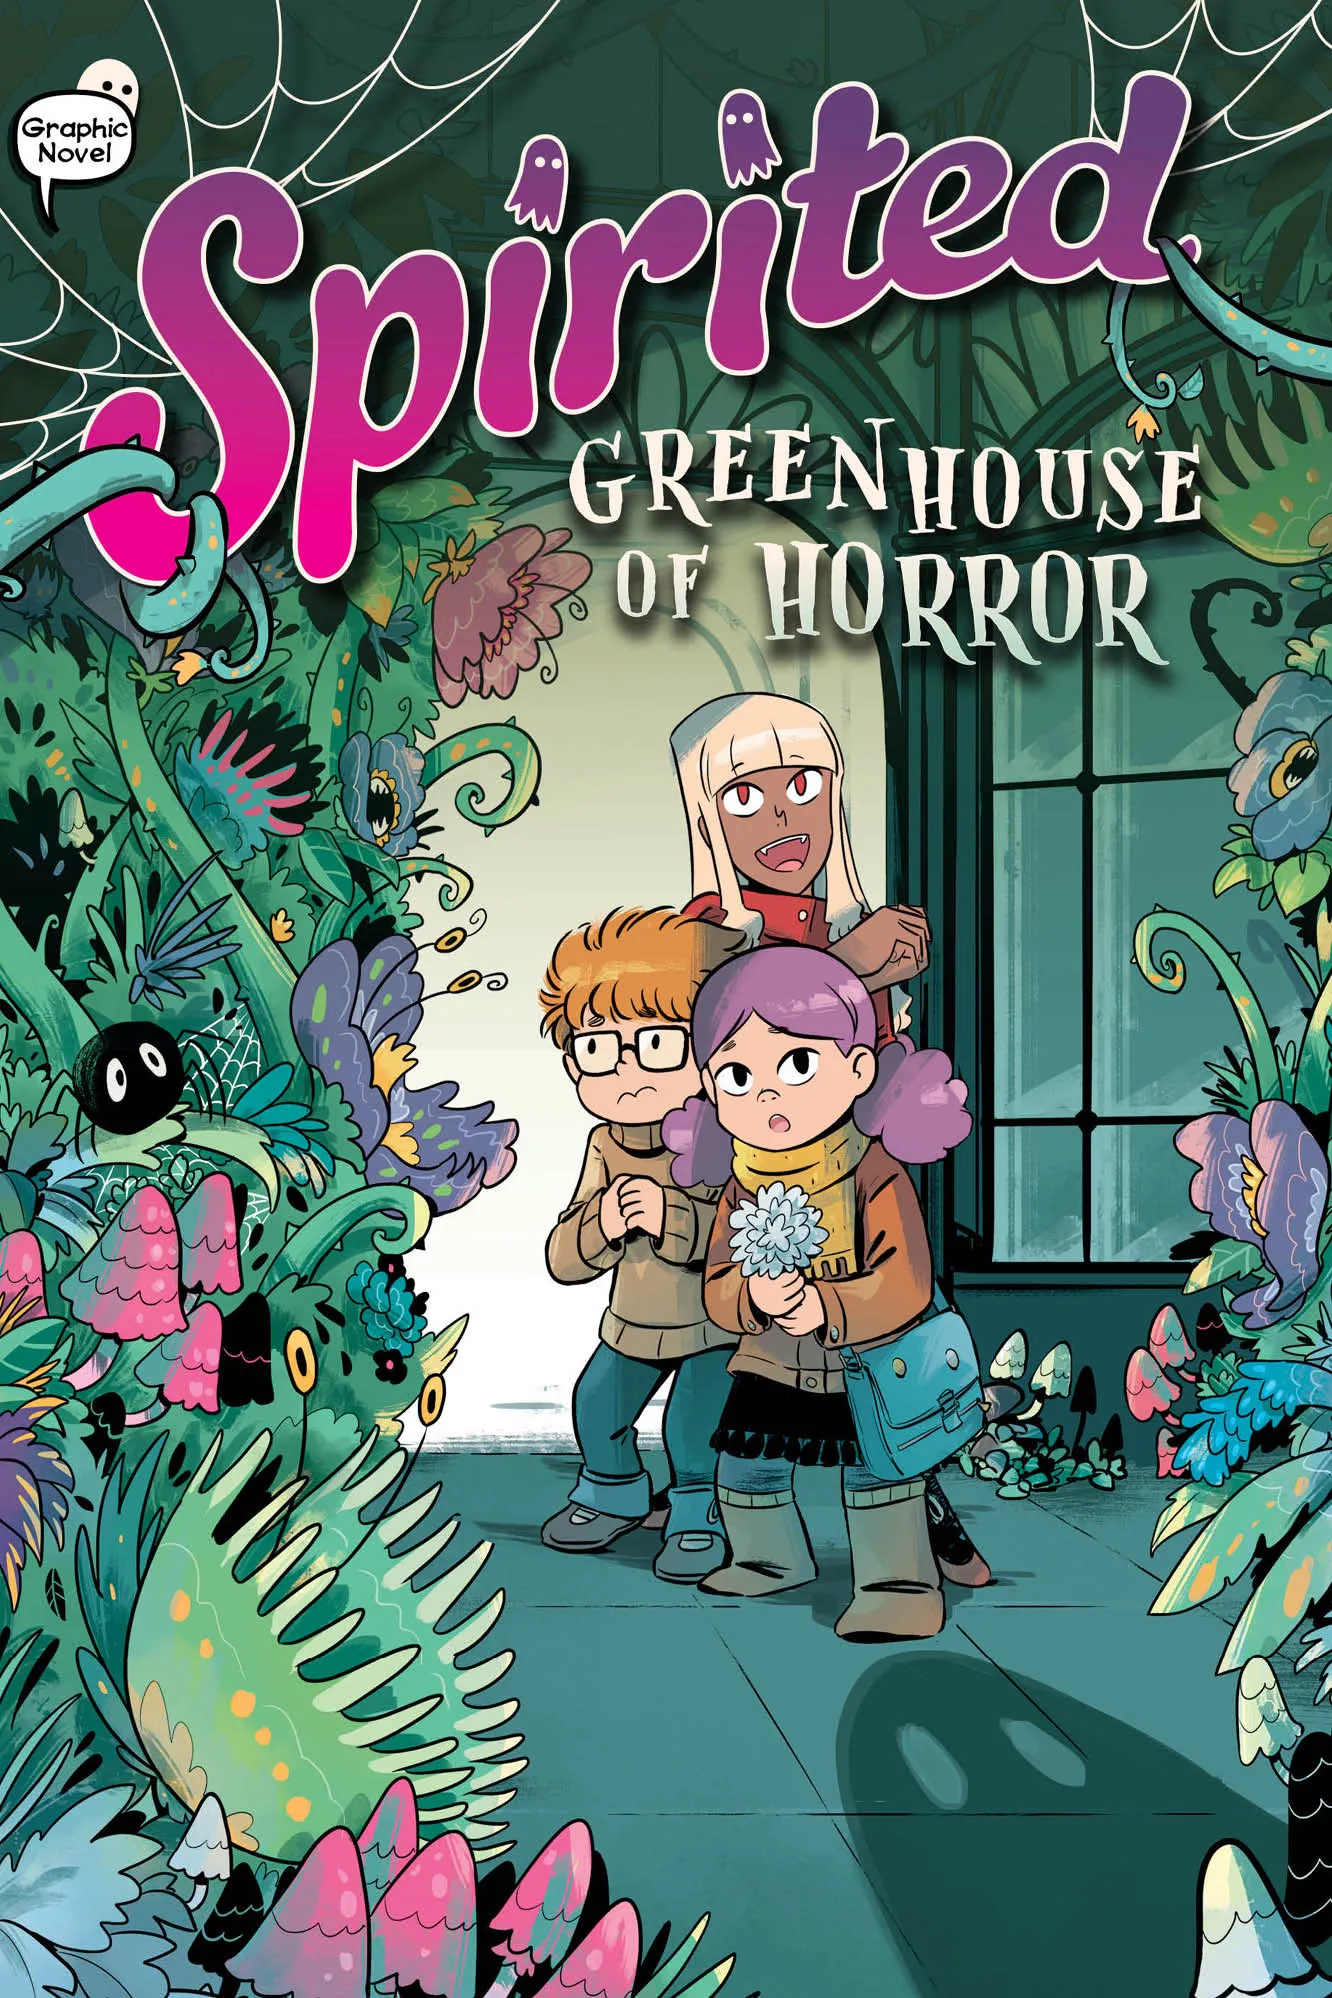 Greenhouse of Horror (Spirited #3)